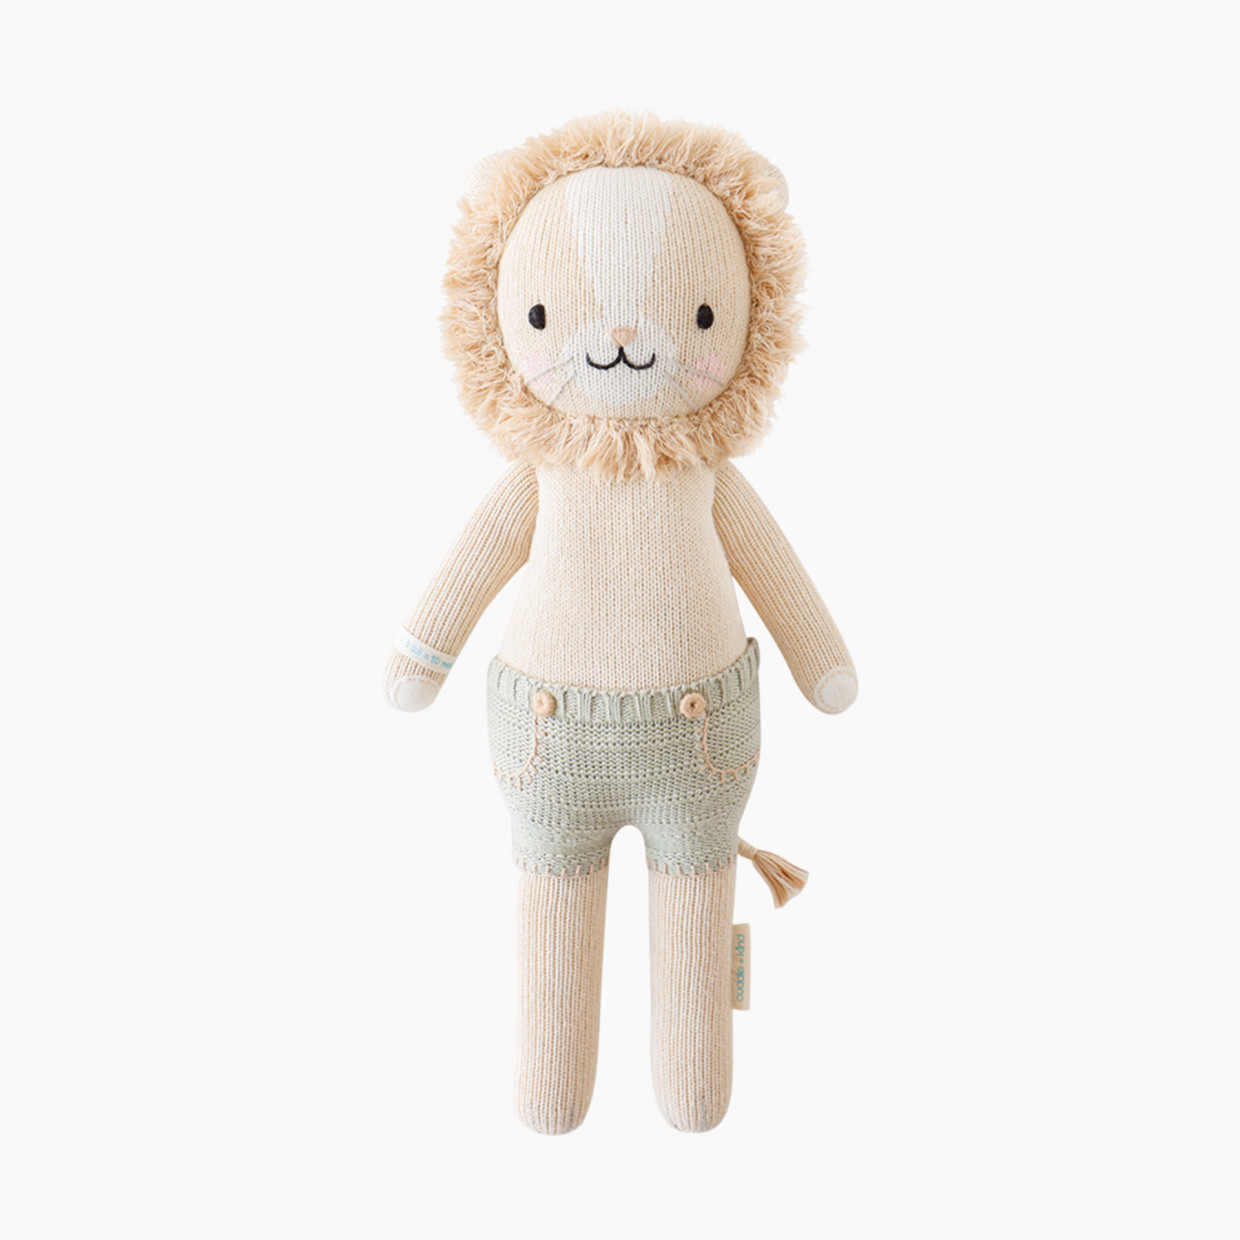 cuddle+kind Hand-Knit Doll - Sawyer The Lion, Little 13".